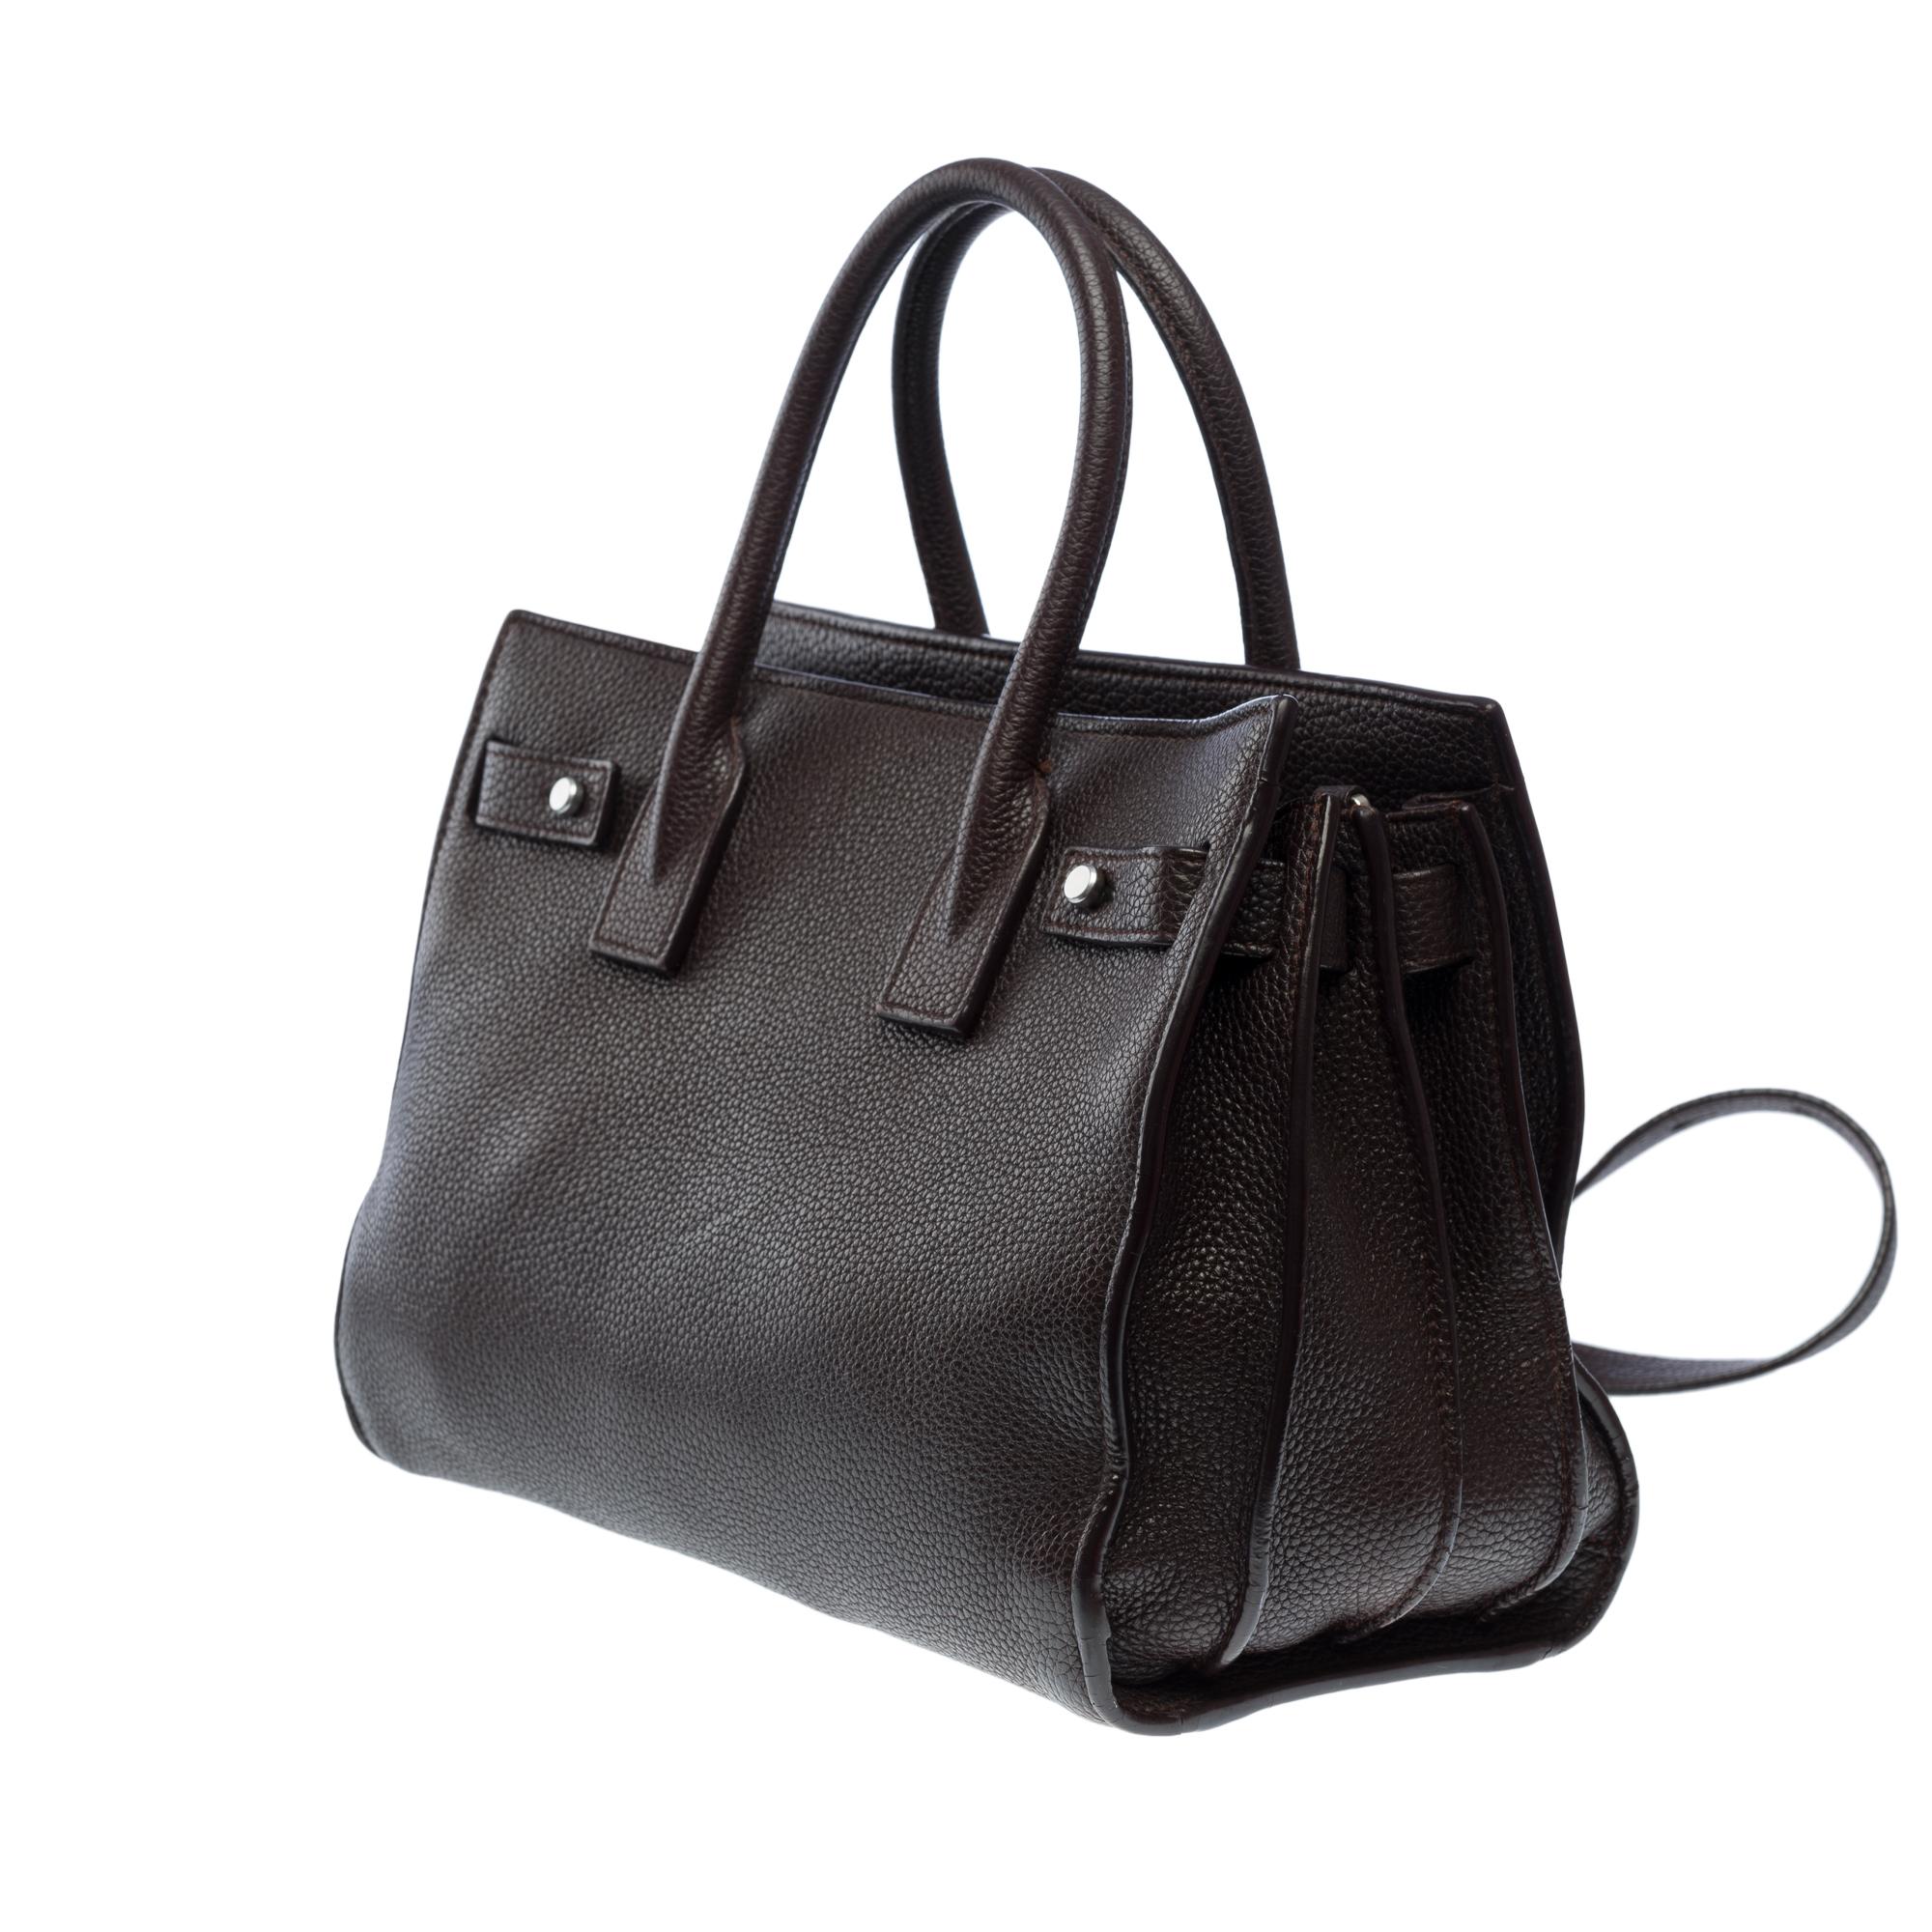 Saint Laurent Nano Sac de Jour handbag strap in burgundy grained leather, SHW For Sale 1